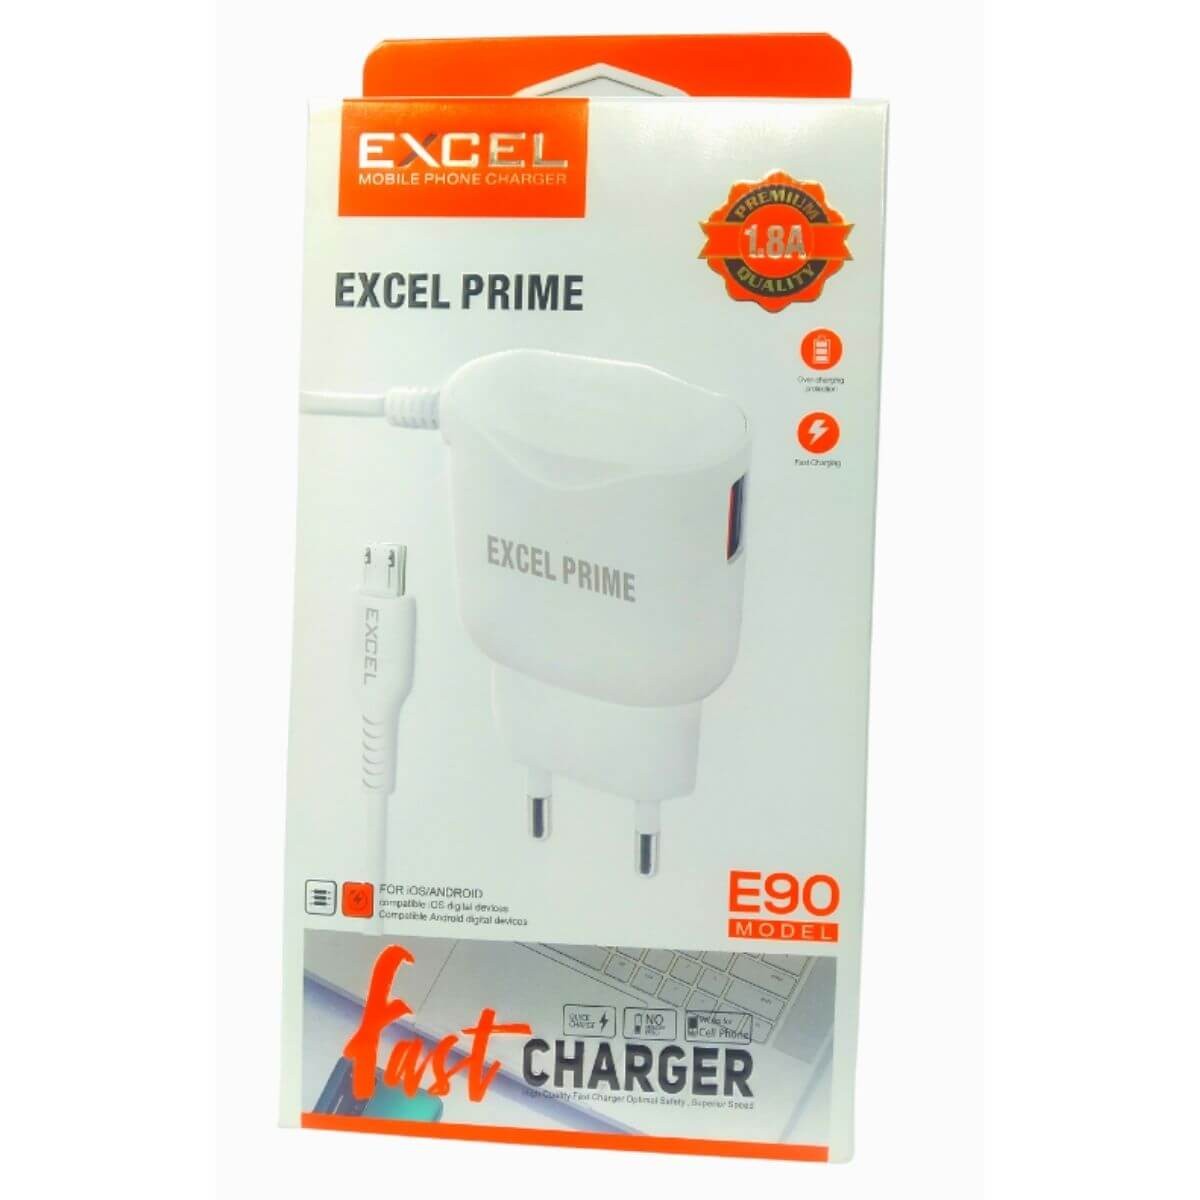 Excel 1.8A E90 Micro Charger BD